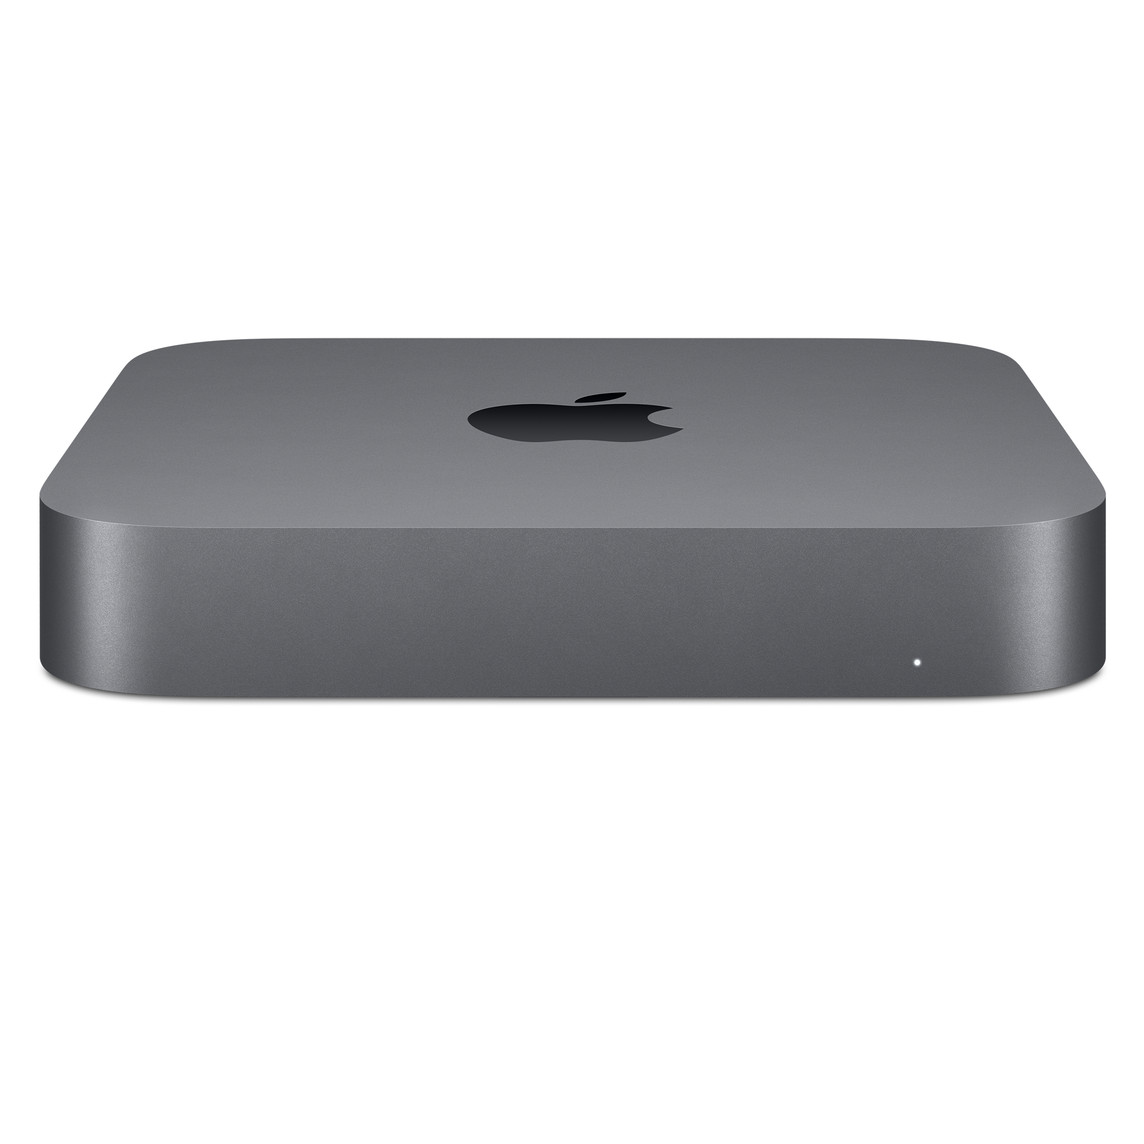 Mac mini 正面，展示机顶的 Apple 标志。